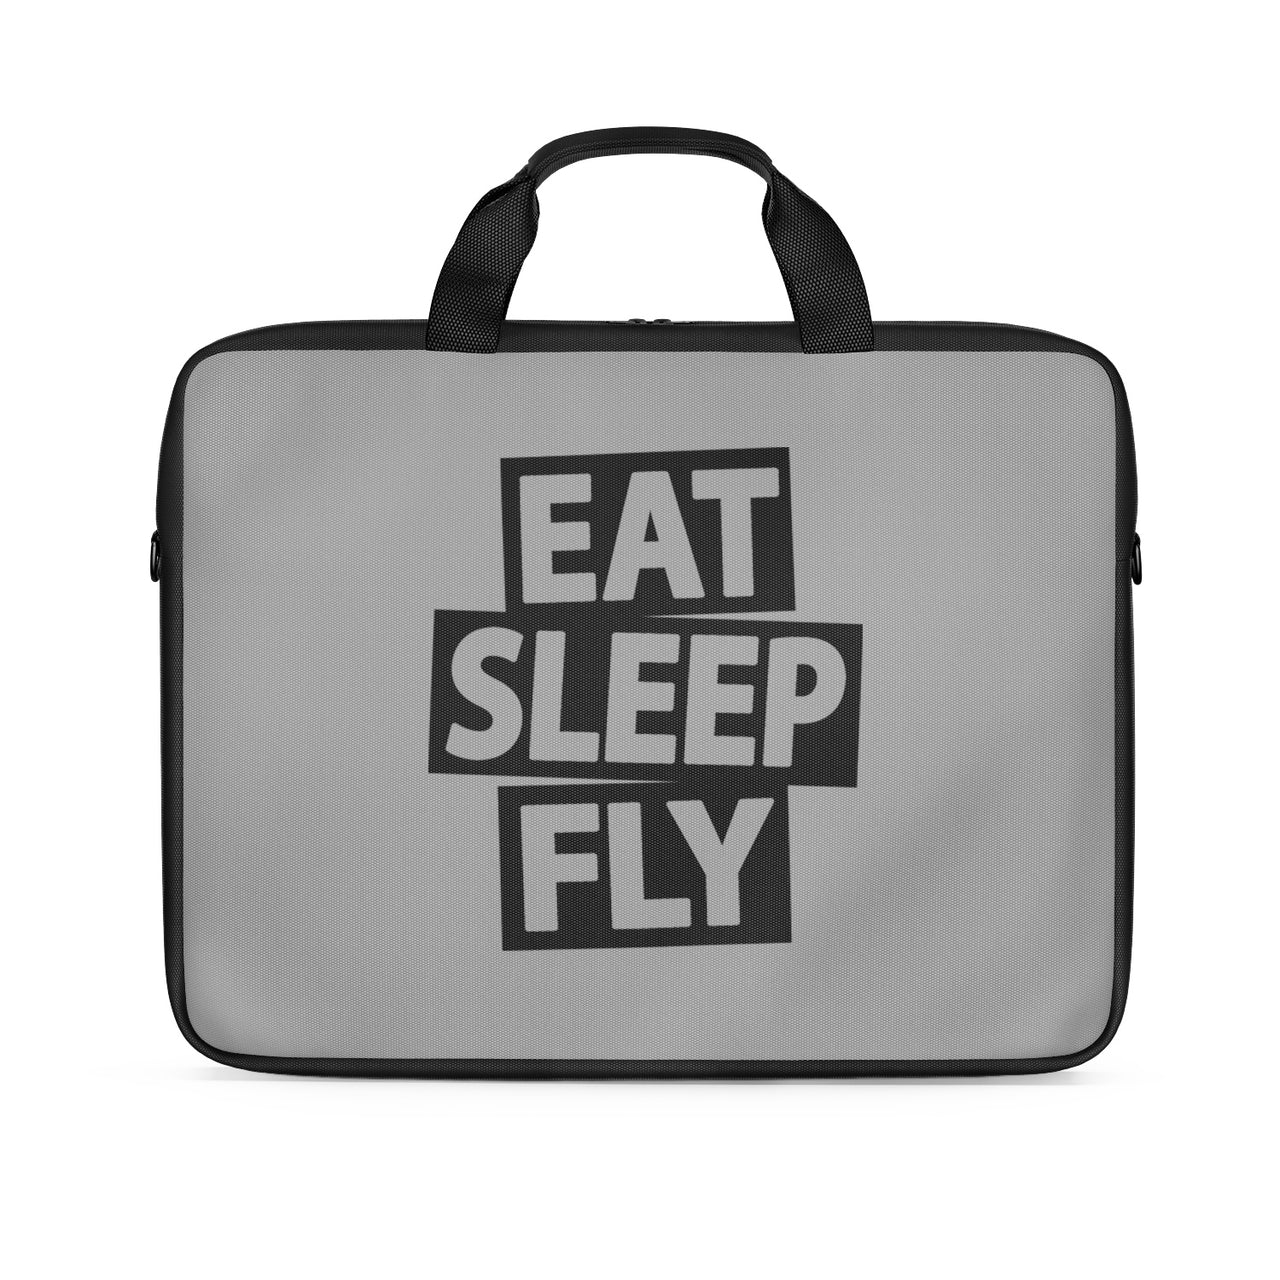 Eat Sleep Fly Designed Laptop & Tablet Bags